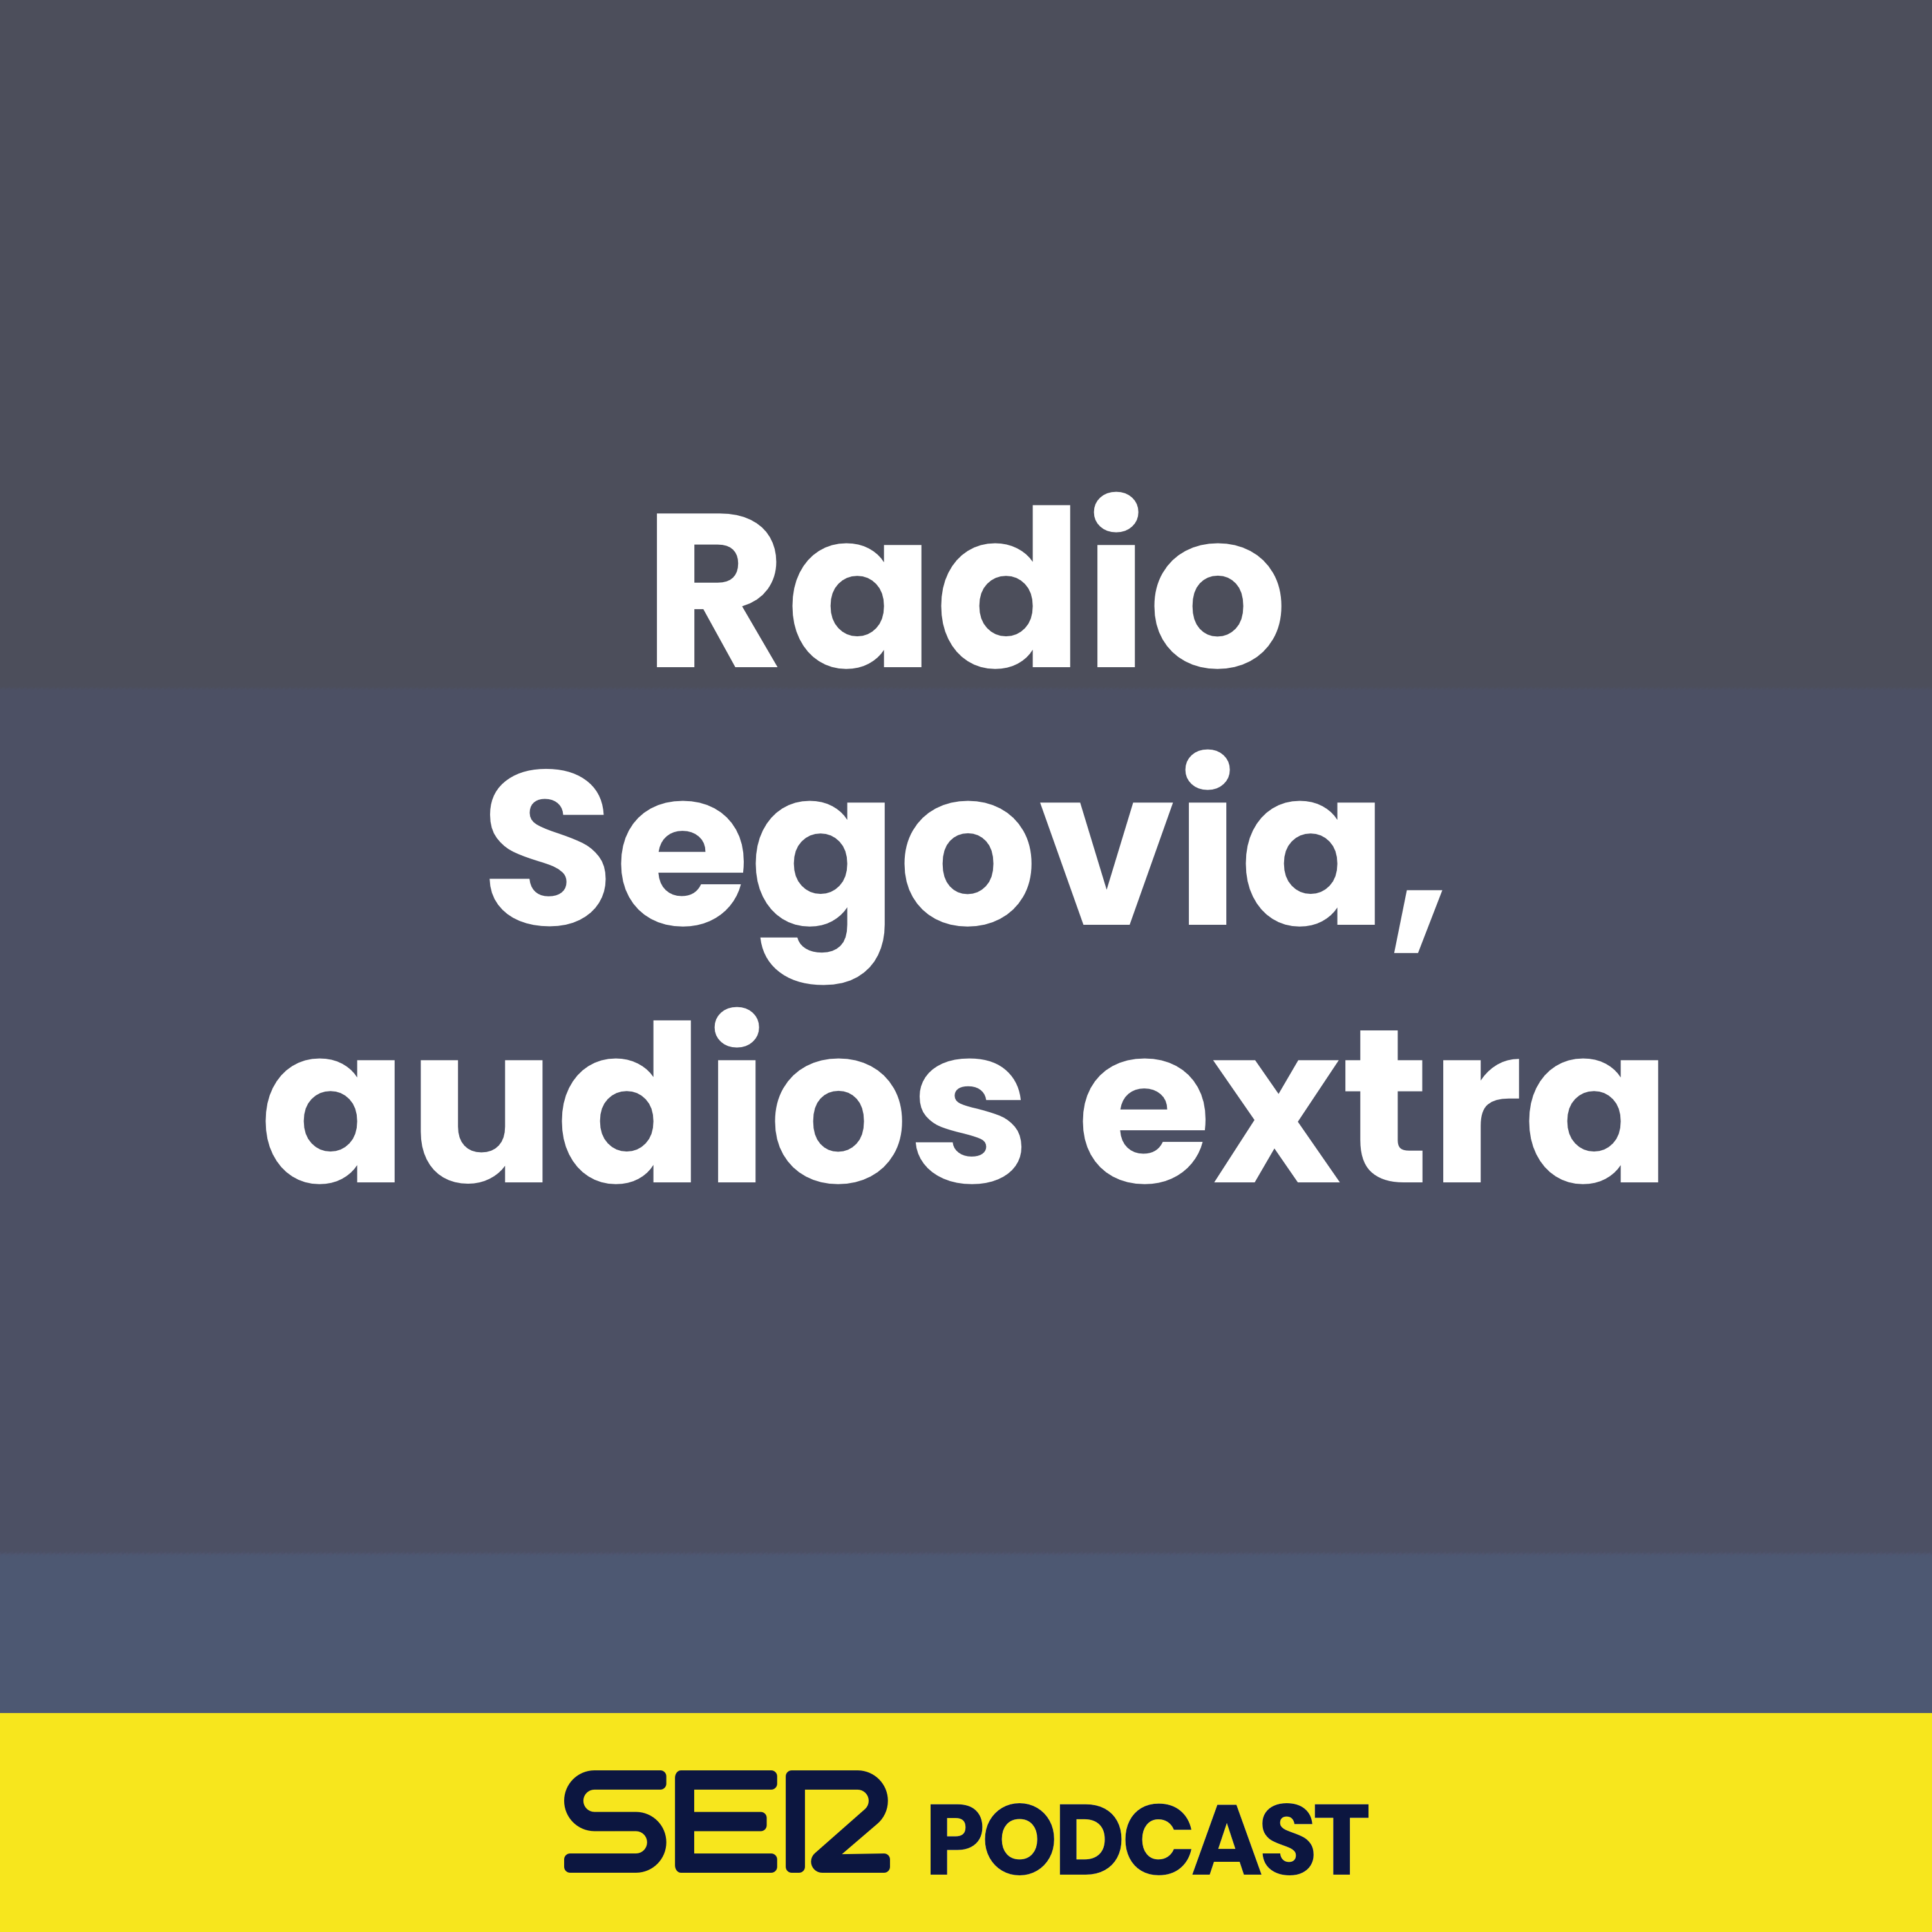 Radio Segovia, audios extra